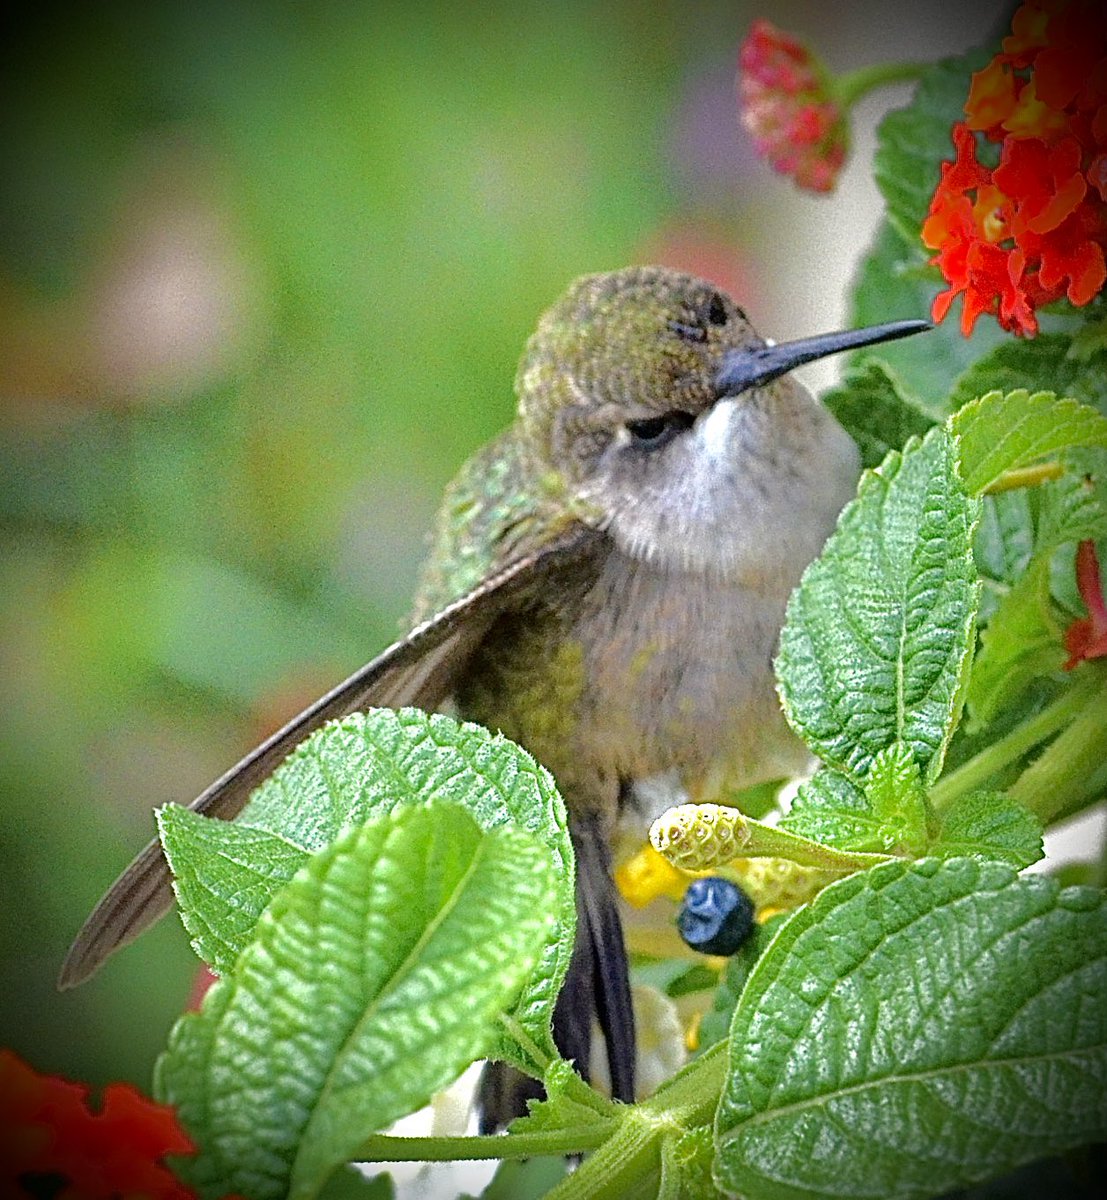 Good morning and happy Wednesday. The #hummingbird for #WildlifeWednesday #WingedWednesday. Holding on.